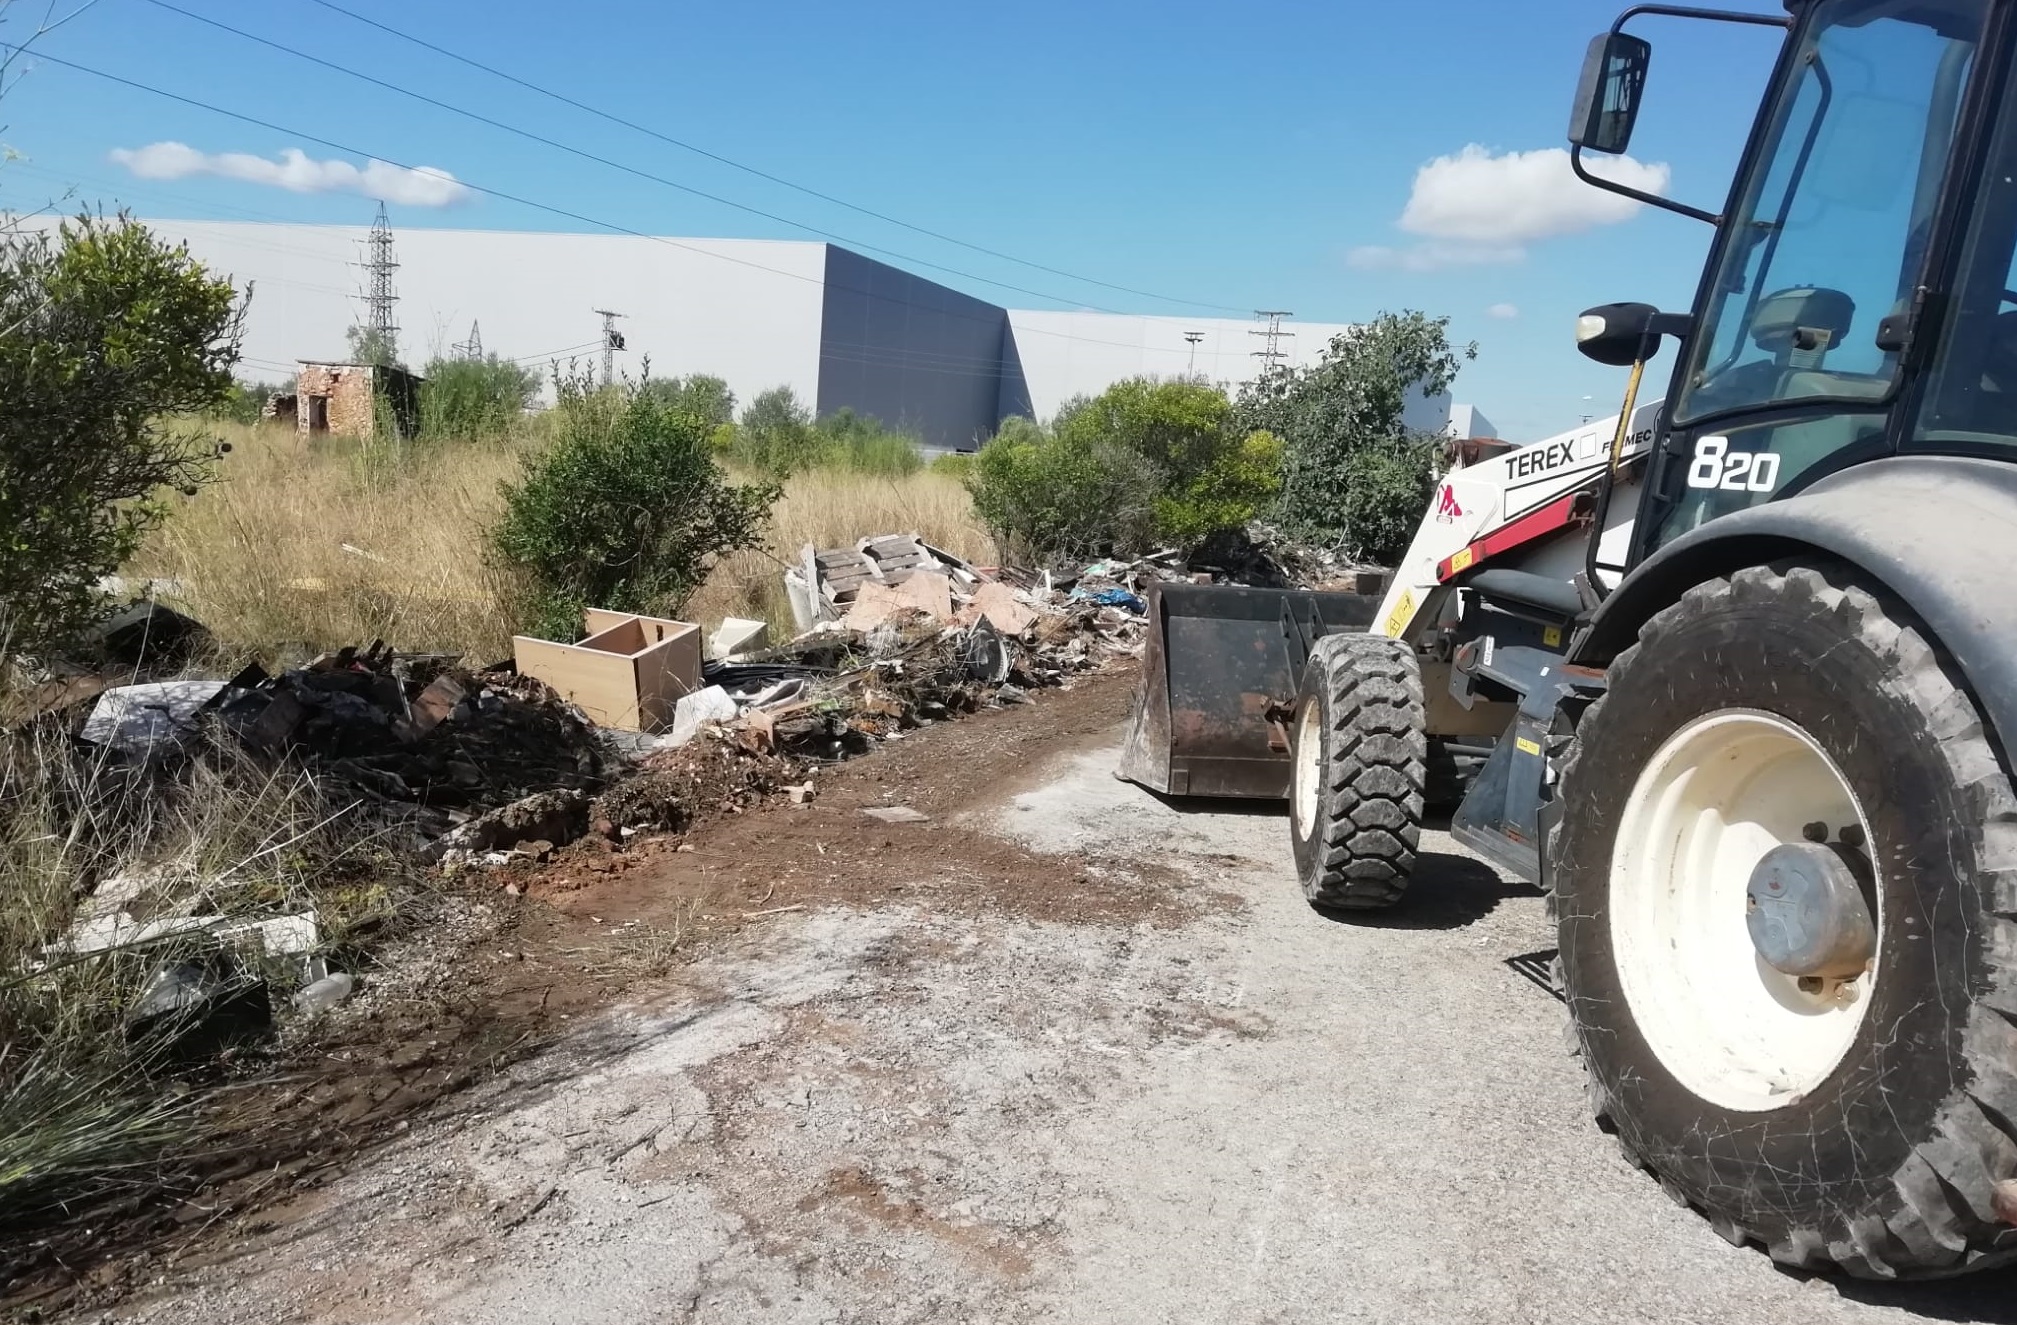 Vila-real elimina seis vertederos ilegales y retira cerca de 30 toneladas de residuos